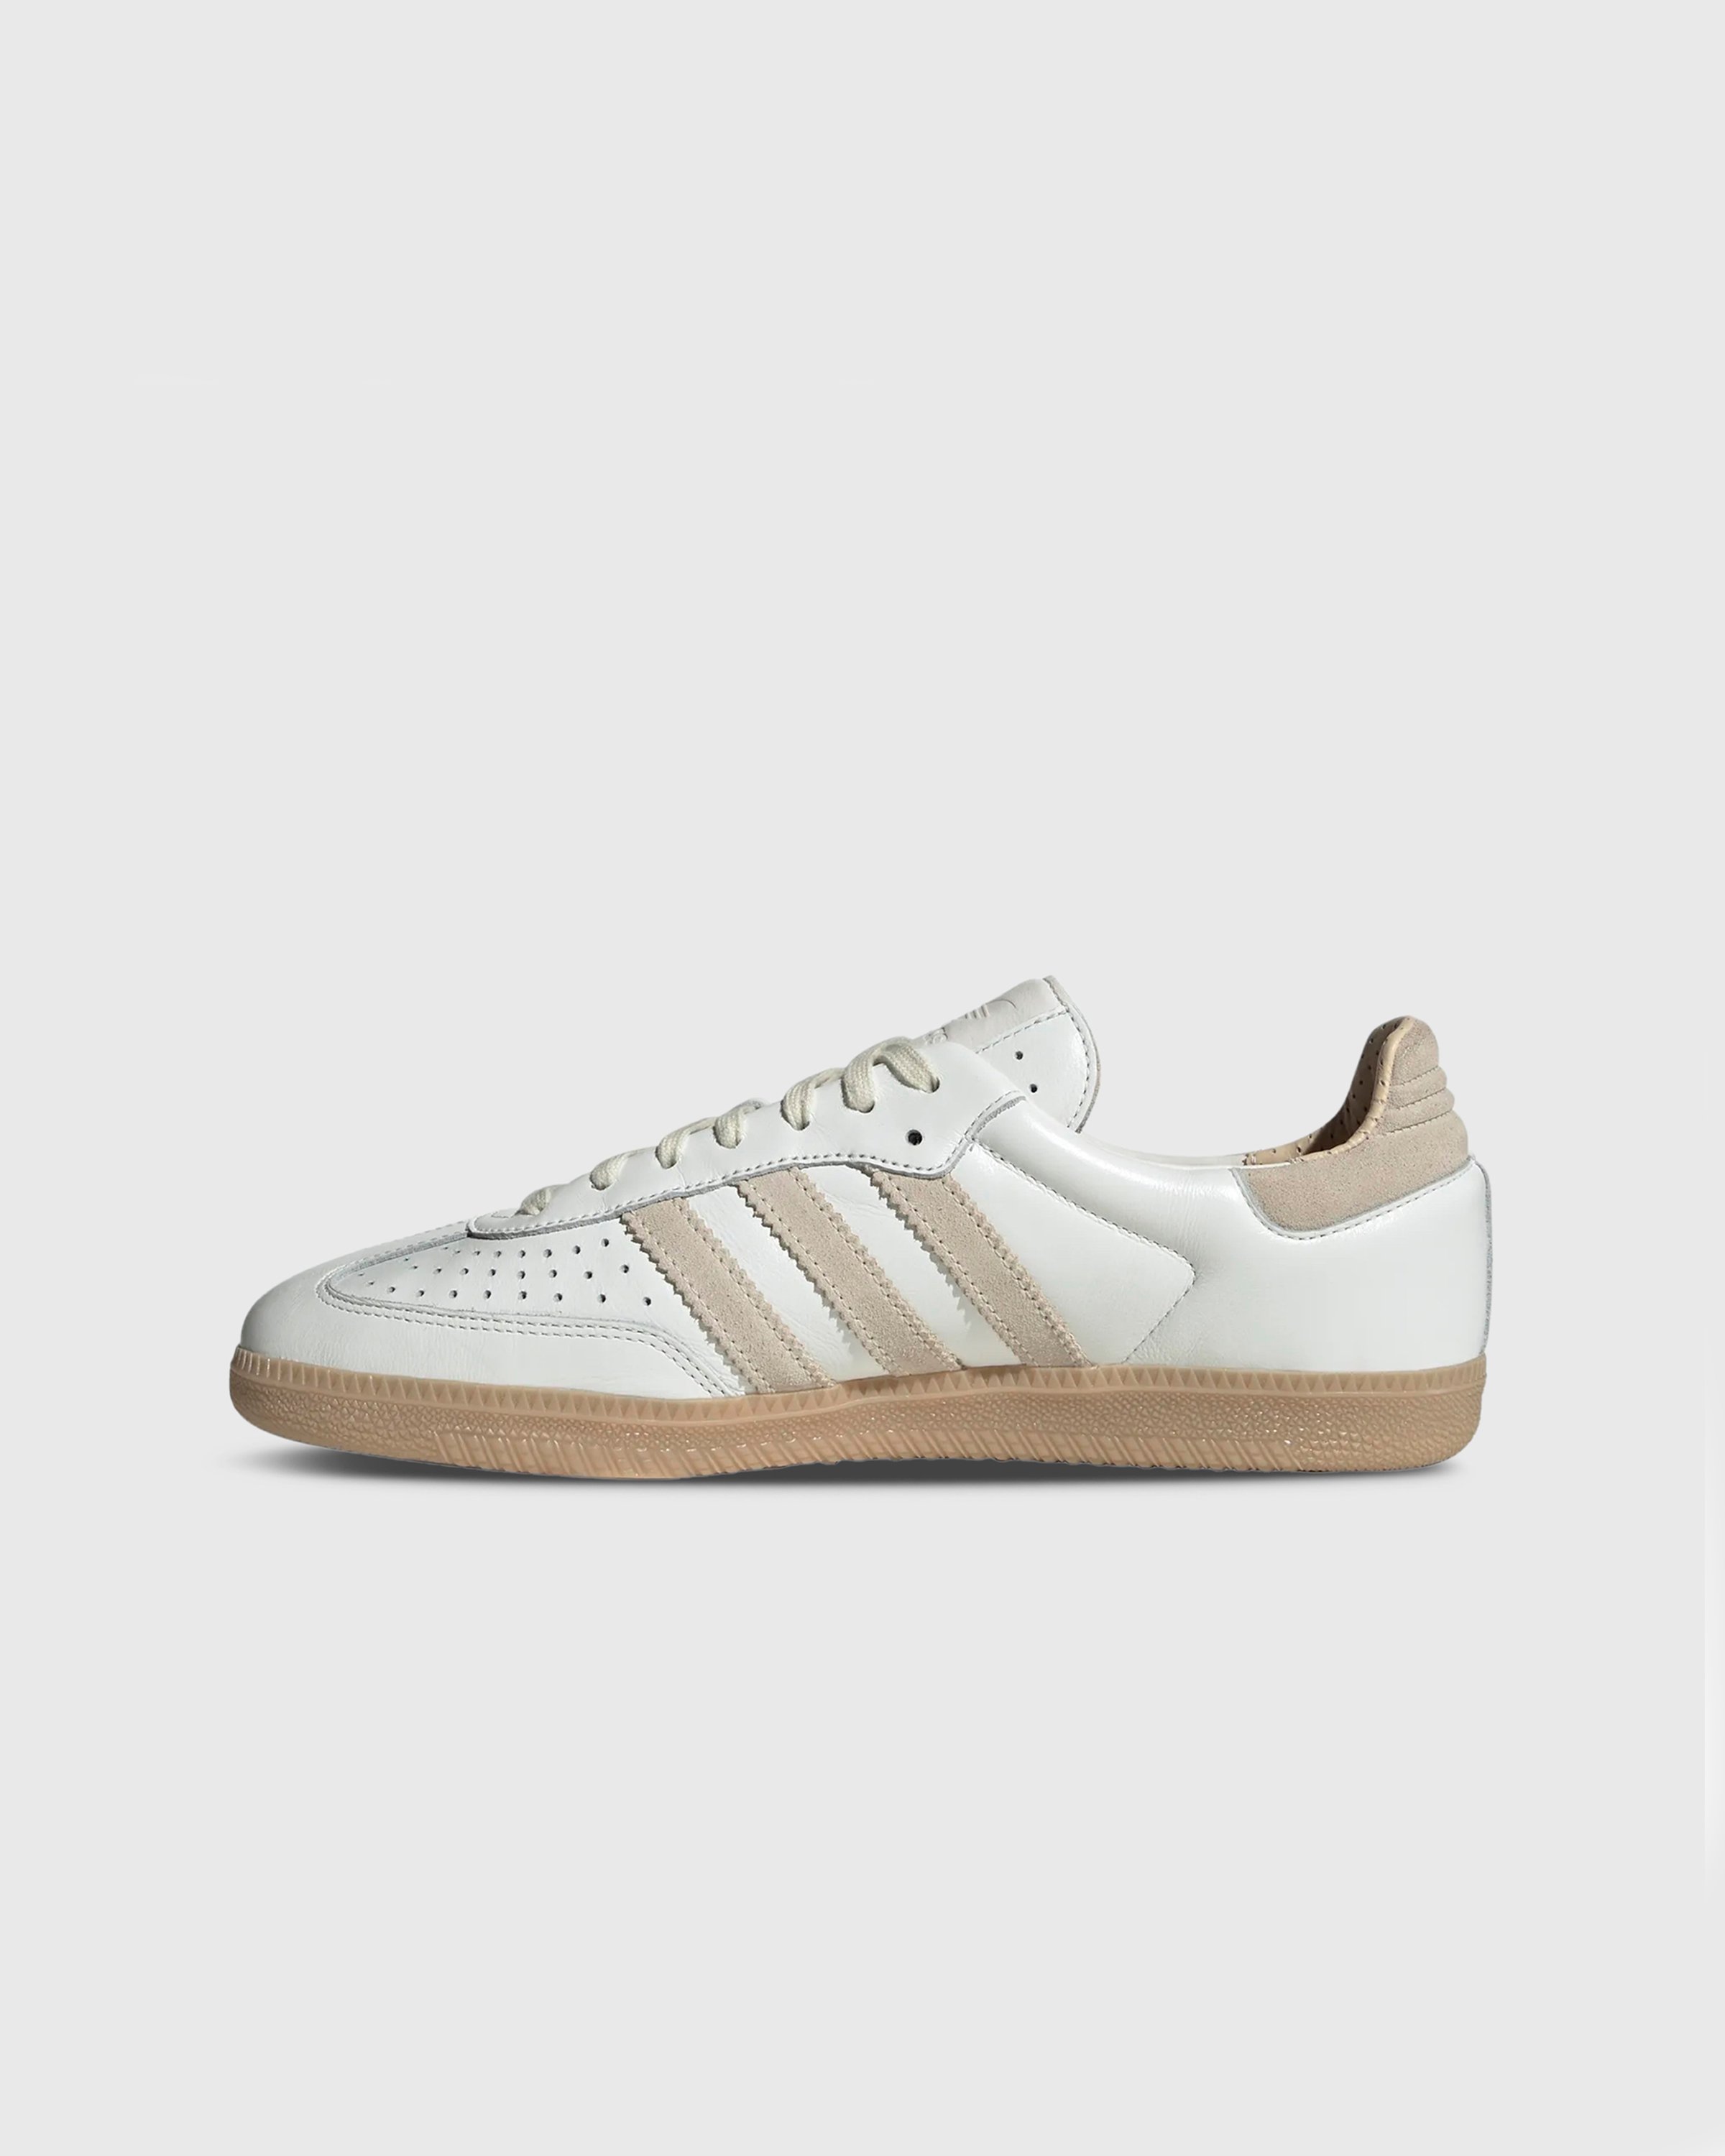 Adidas - SAMBA OG            CWHITE/WONWHI/MAGBEI - Footwear - White - Image 2